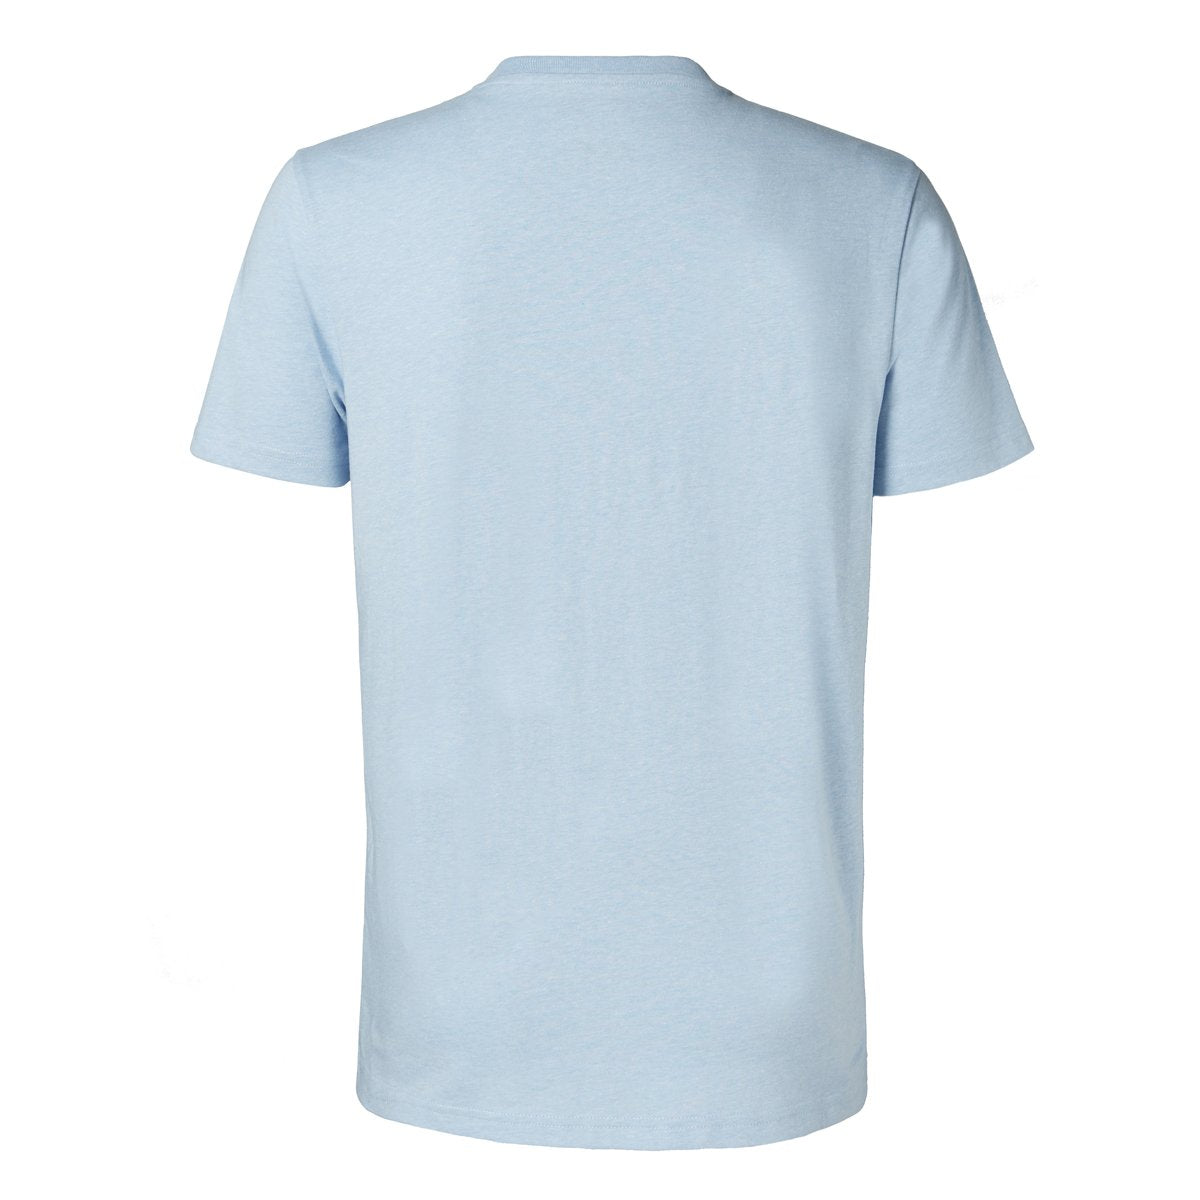 Camiseta Ibagni hombre azul - Imagen 3